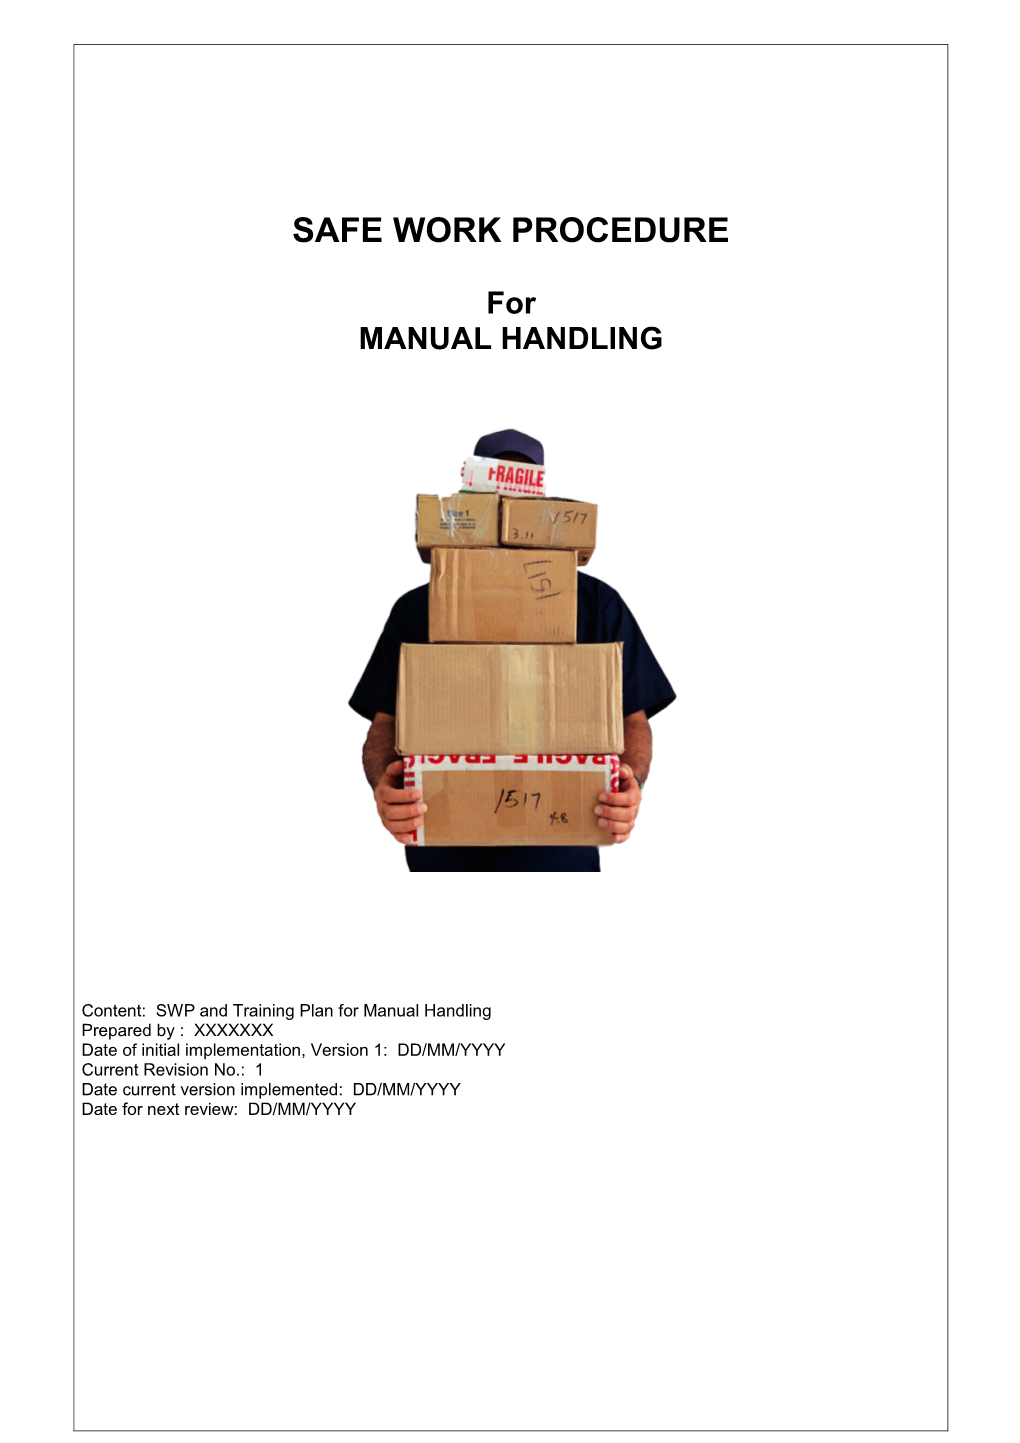 XXXXXXX Pty Ltd Safe Work Procedure Manual Handling Revision: XX DD/MM/YYYY